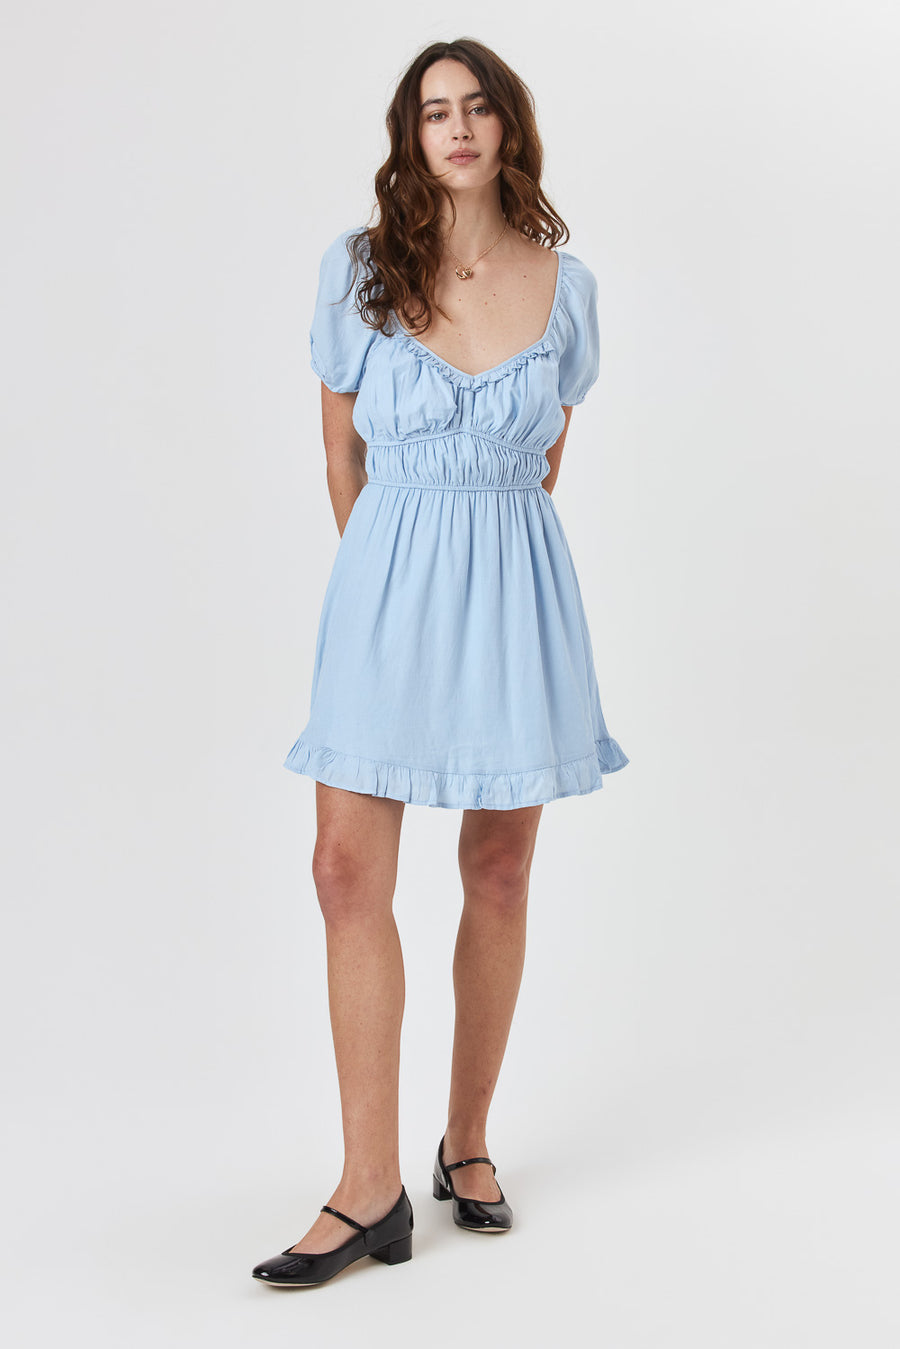 Skyway Blue Puff Sleeve Ruffle Dress - Trixxi Clothing